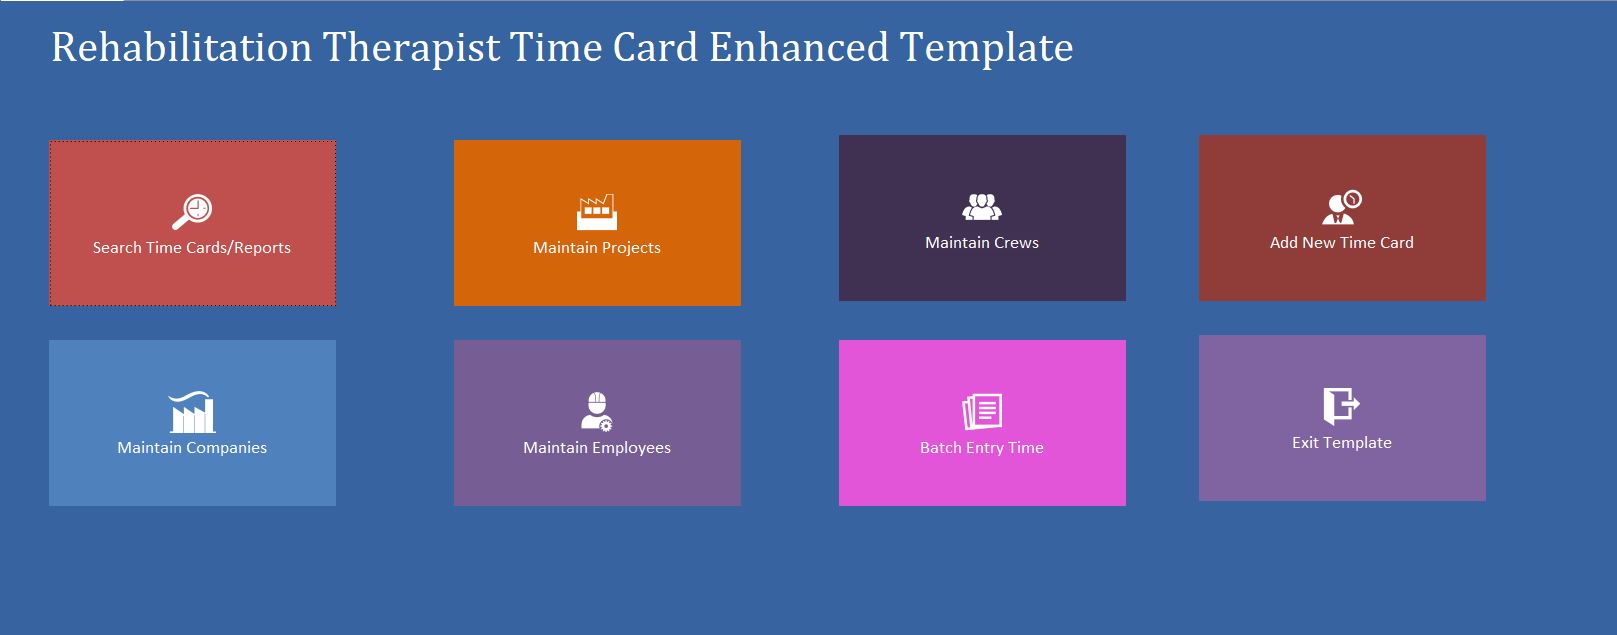 Enhanced Rehabilitation Therapist Time Card Template Database | Time Card Database